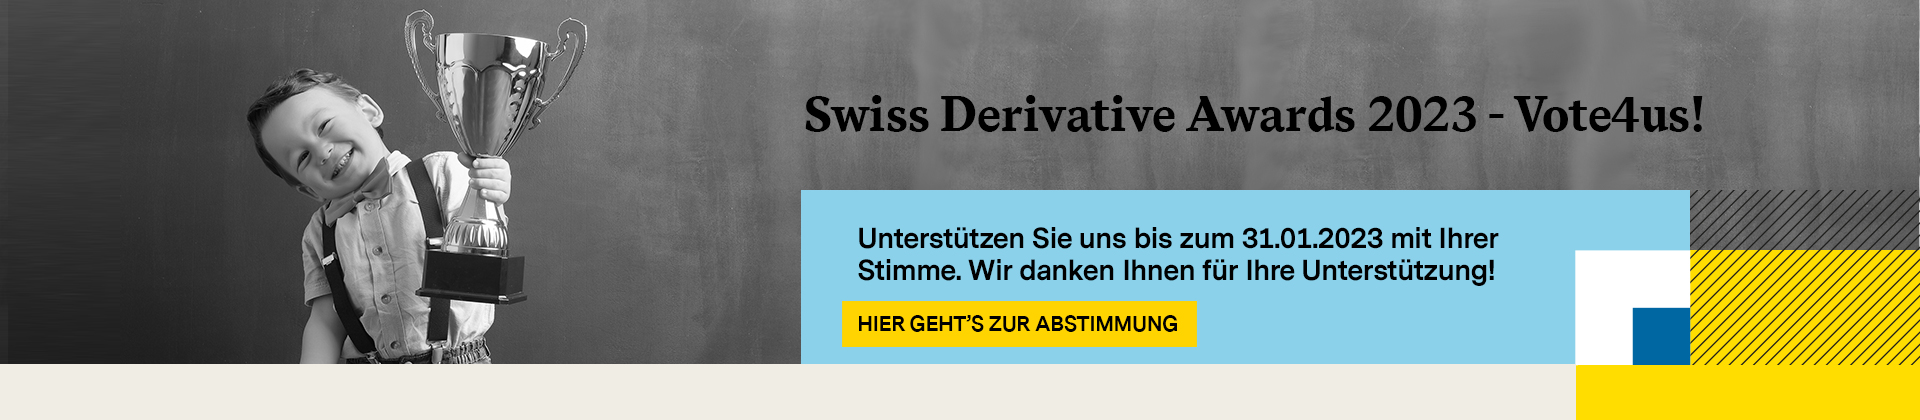 Swiss Derivative Awards 2023